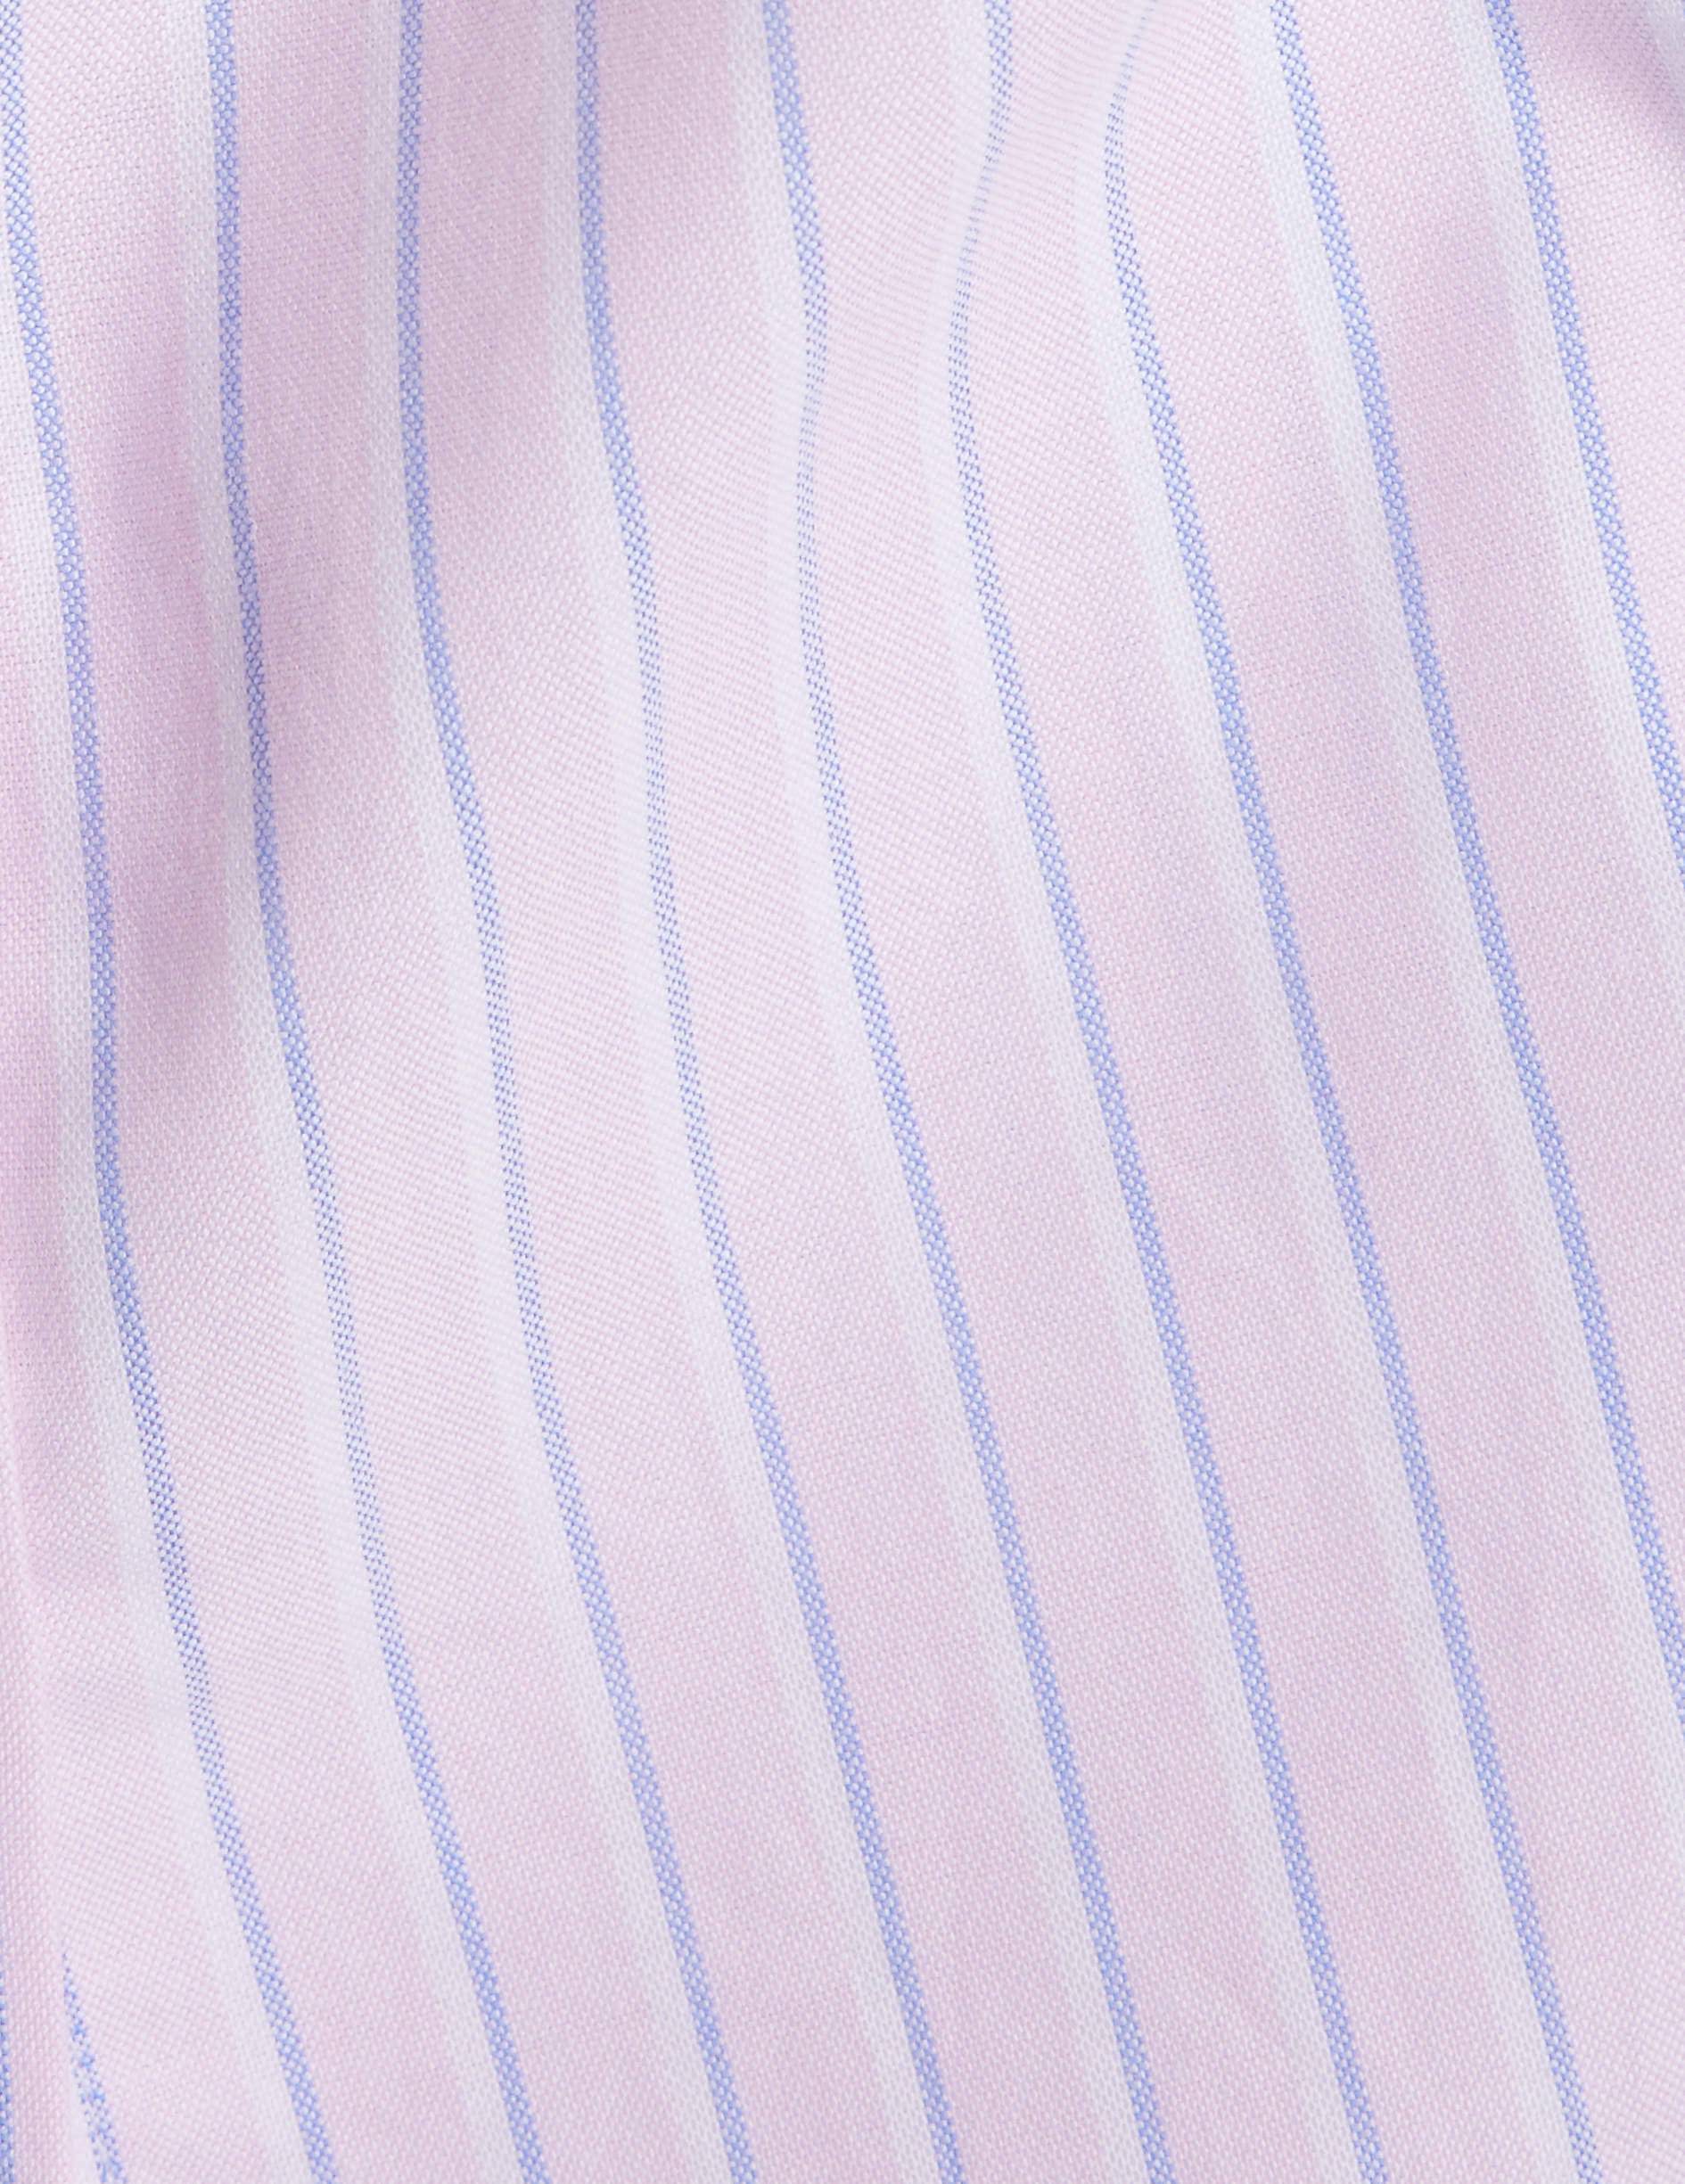 Striped pink Charlotte shirt - Oxford - Shirt Collar